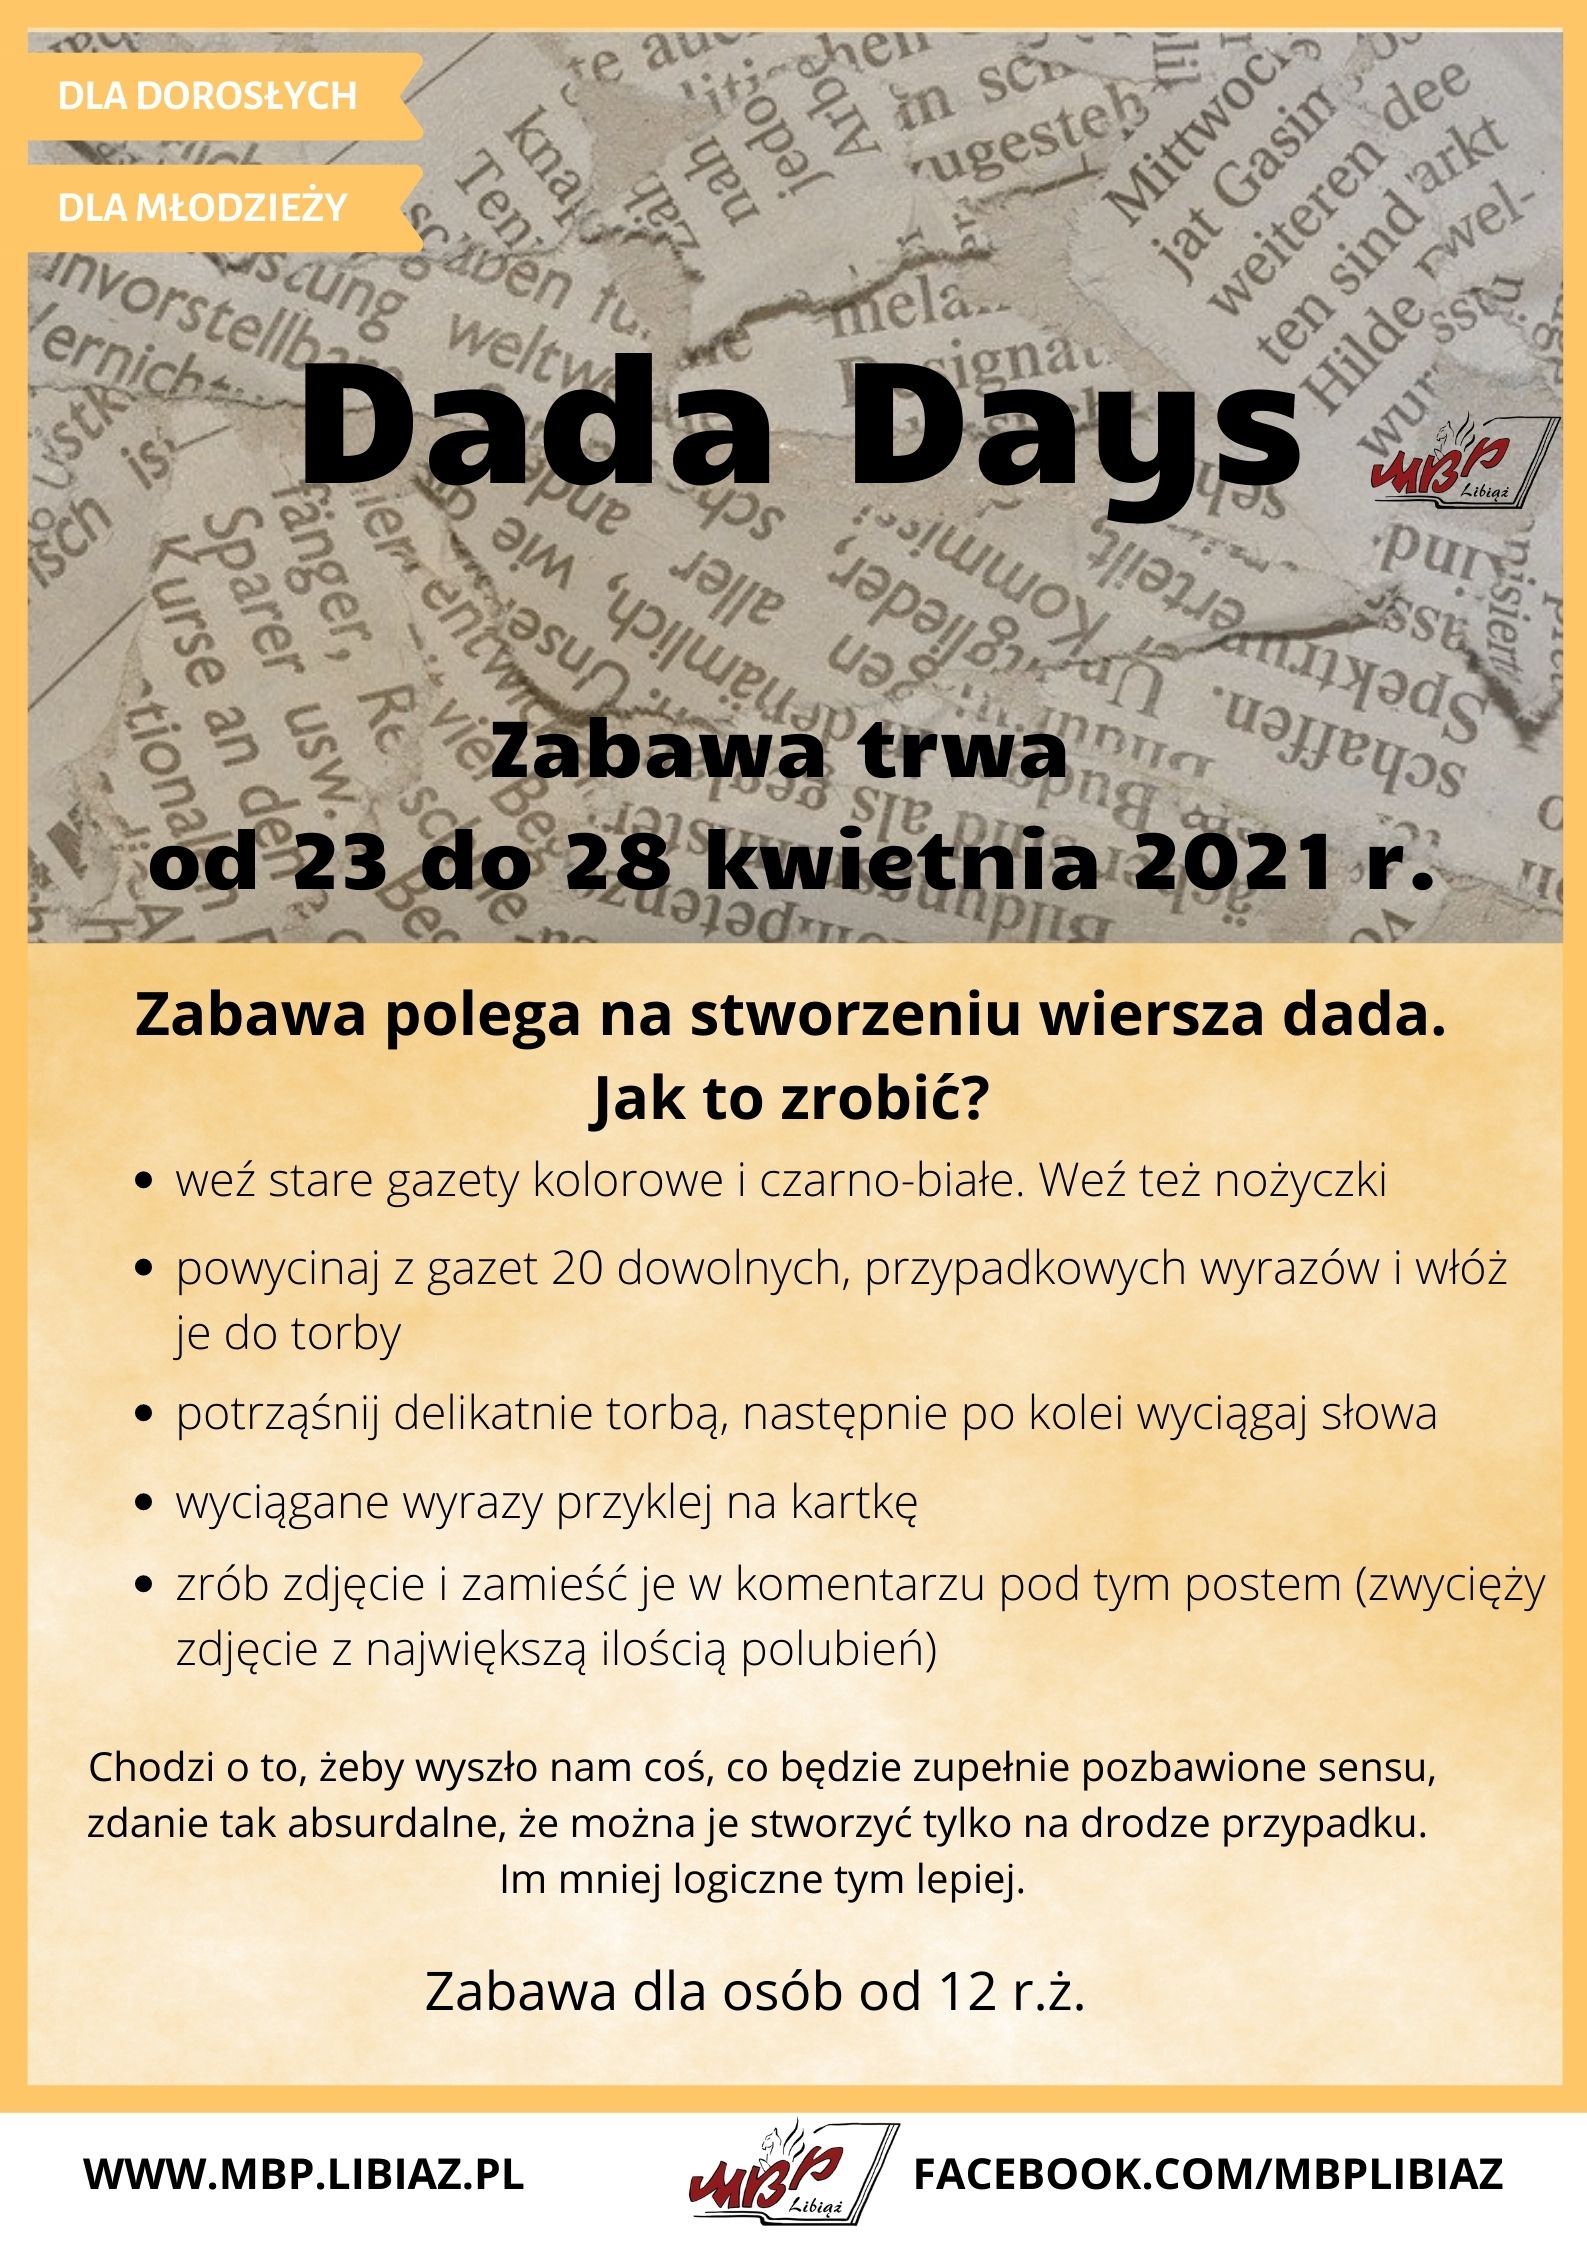 dada days